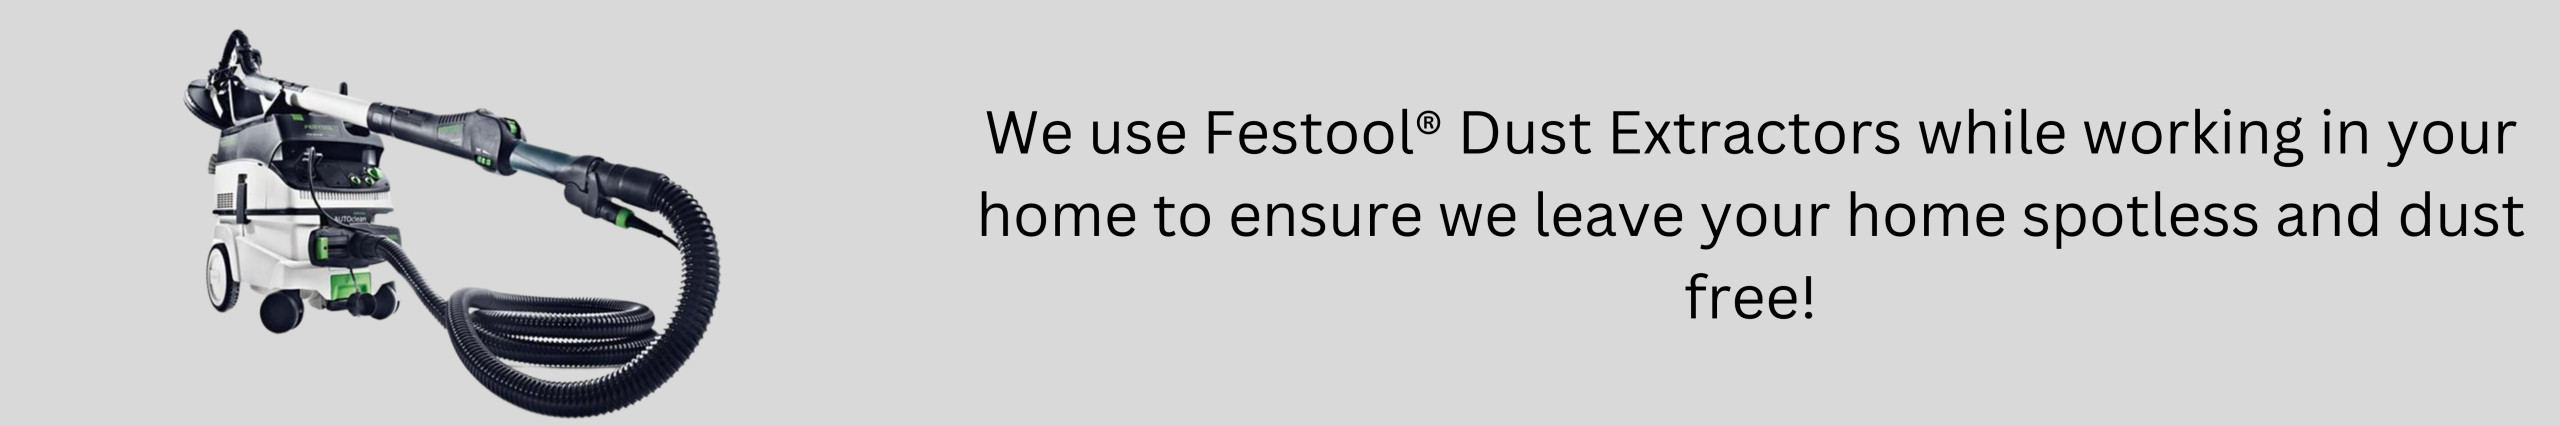 Festool Dust Extractors